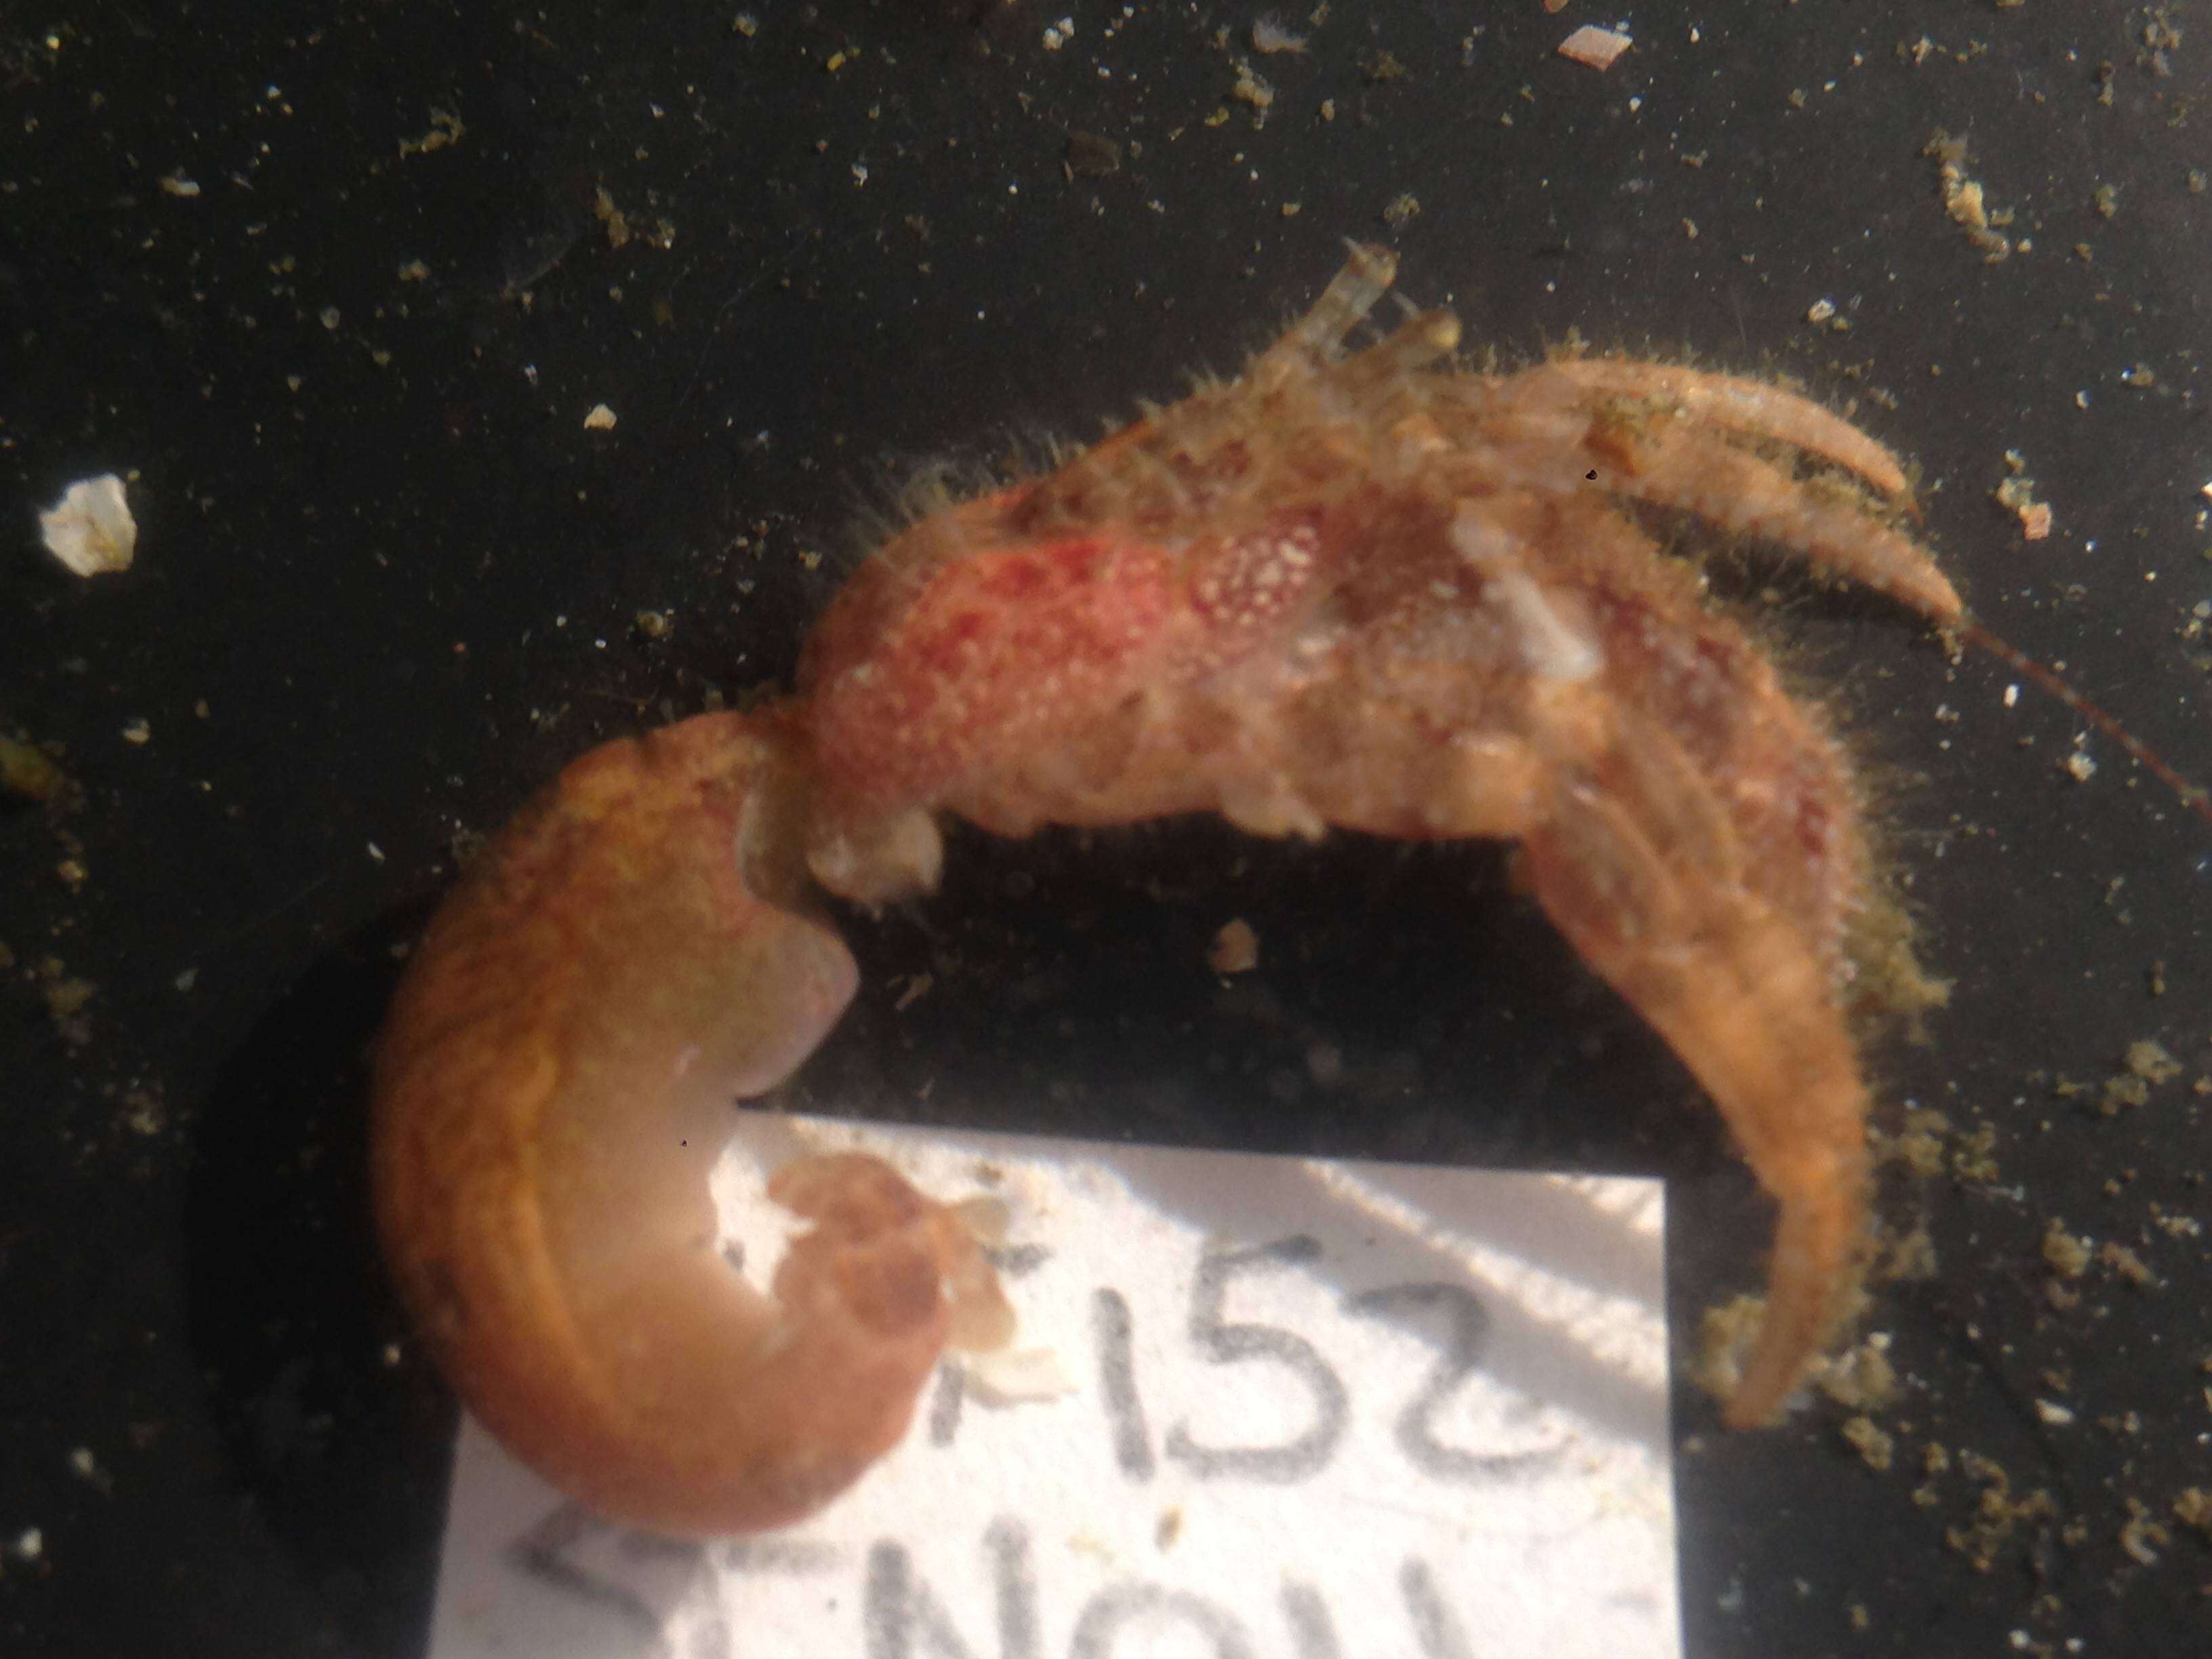 Image of bluespine hermit crab